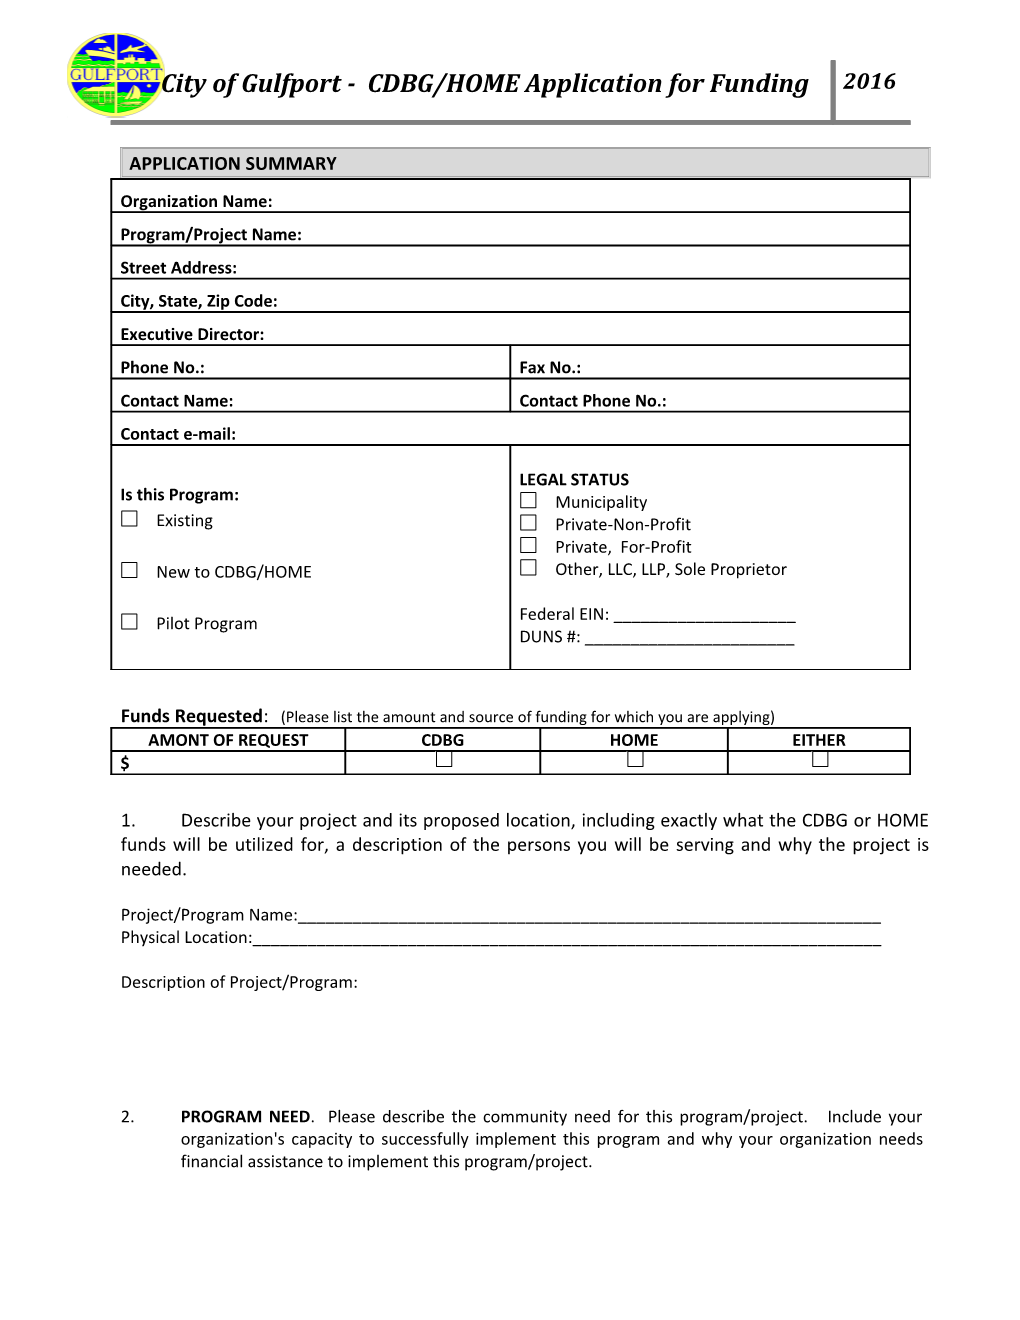 City of Gulfport CDBG/HOME Application Form